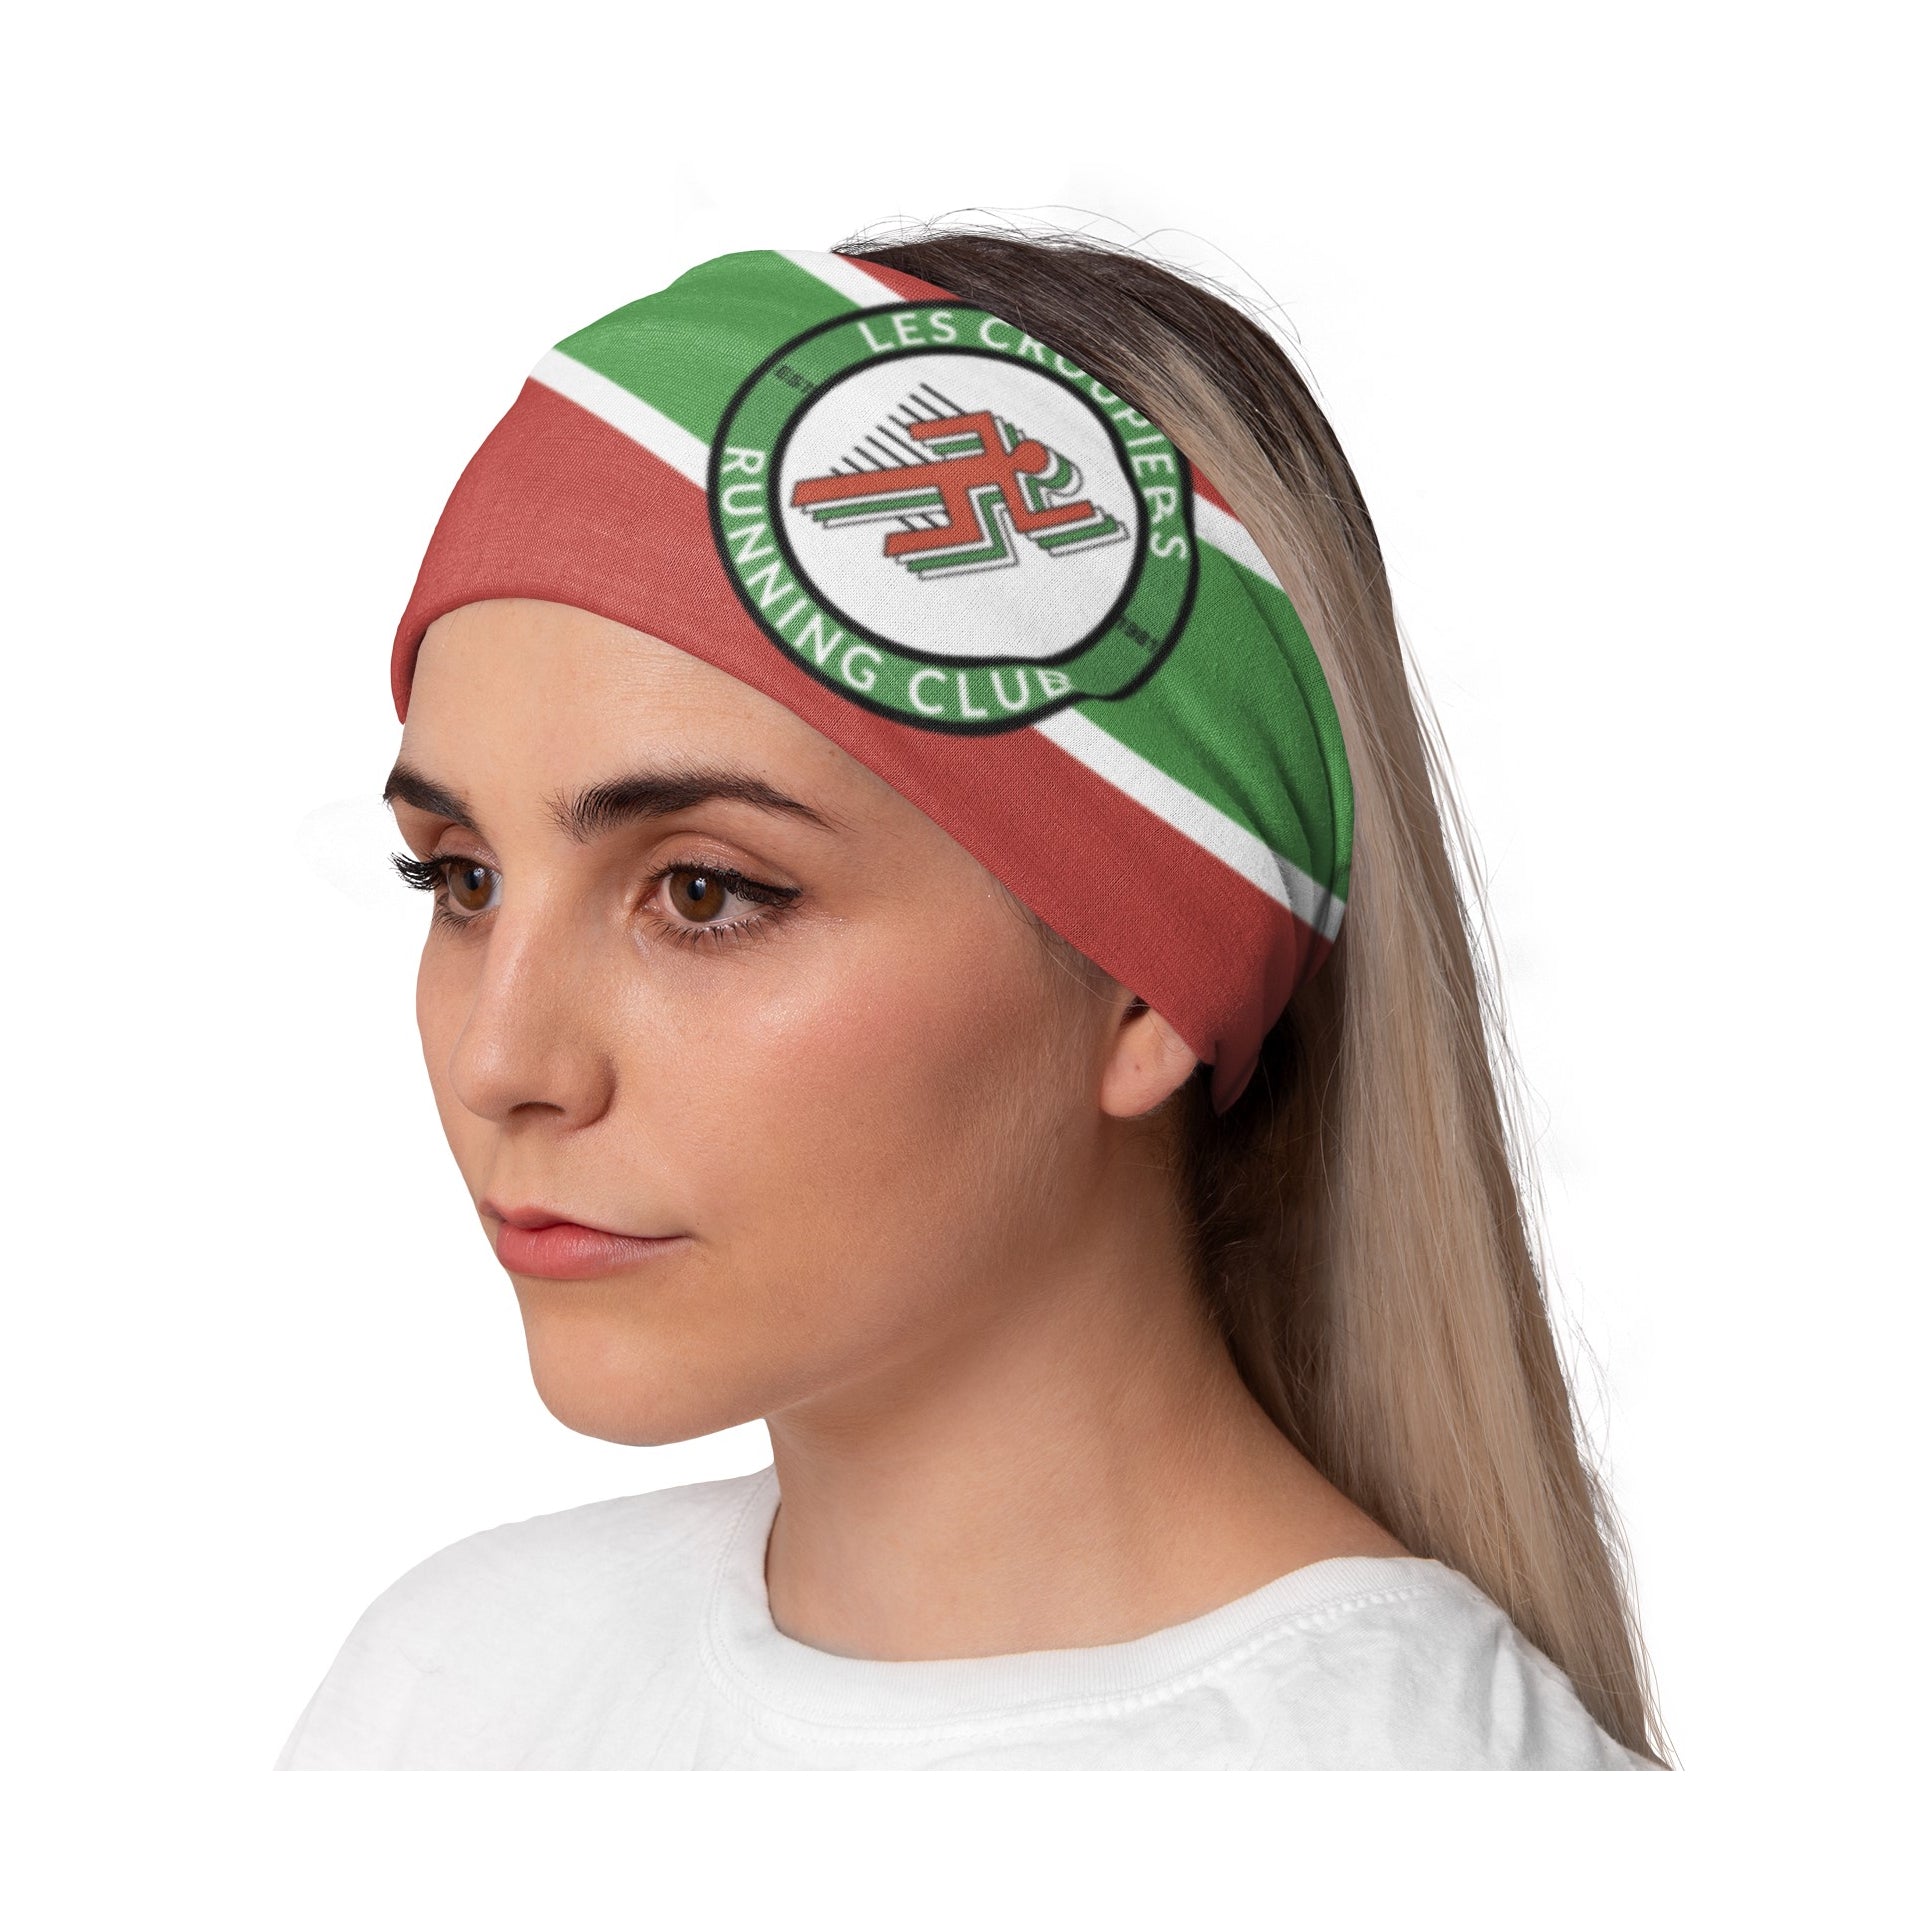 Lunabands Les Croupiers Running Club Cardiff Multi use tubular Bandana Snood Headband